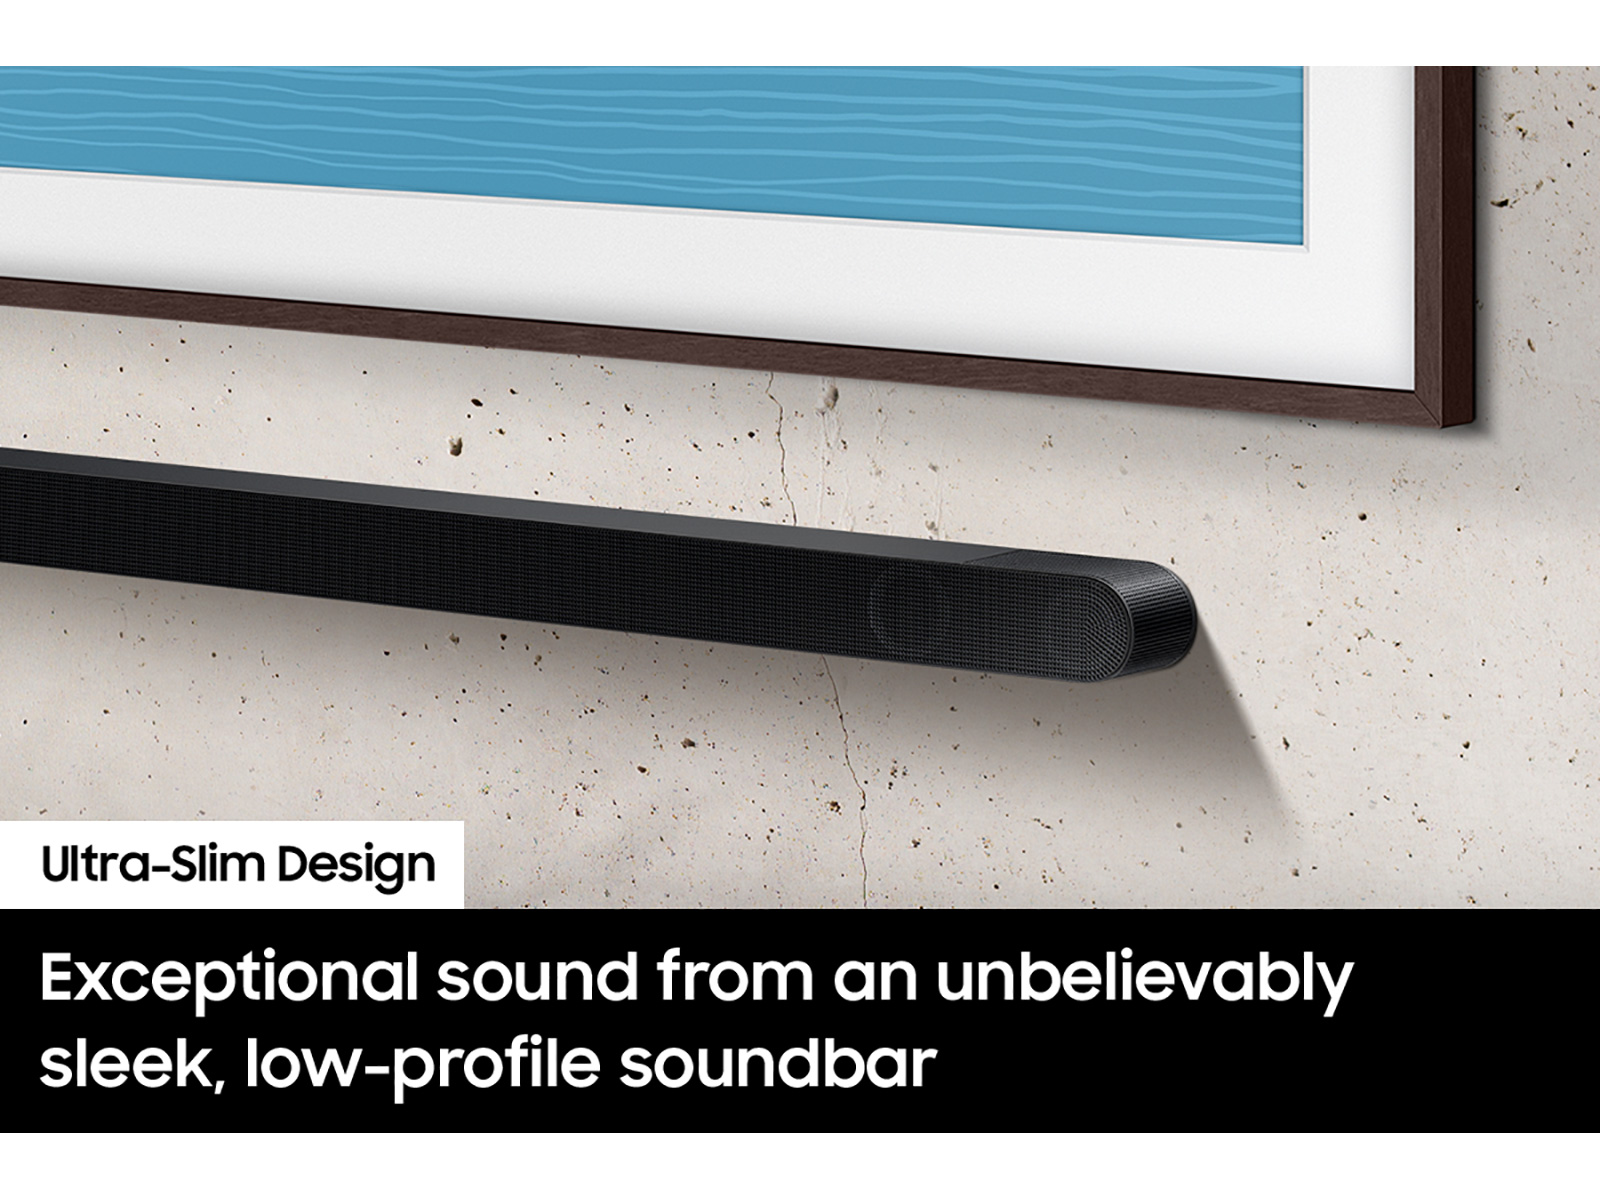 Samsung's Ultra Slim Soundbar is as crazy slim as advertised